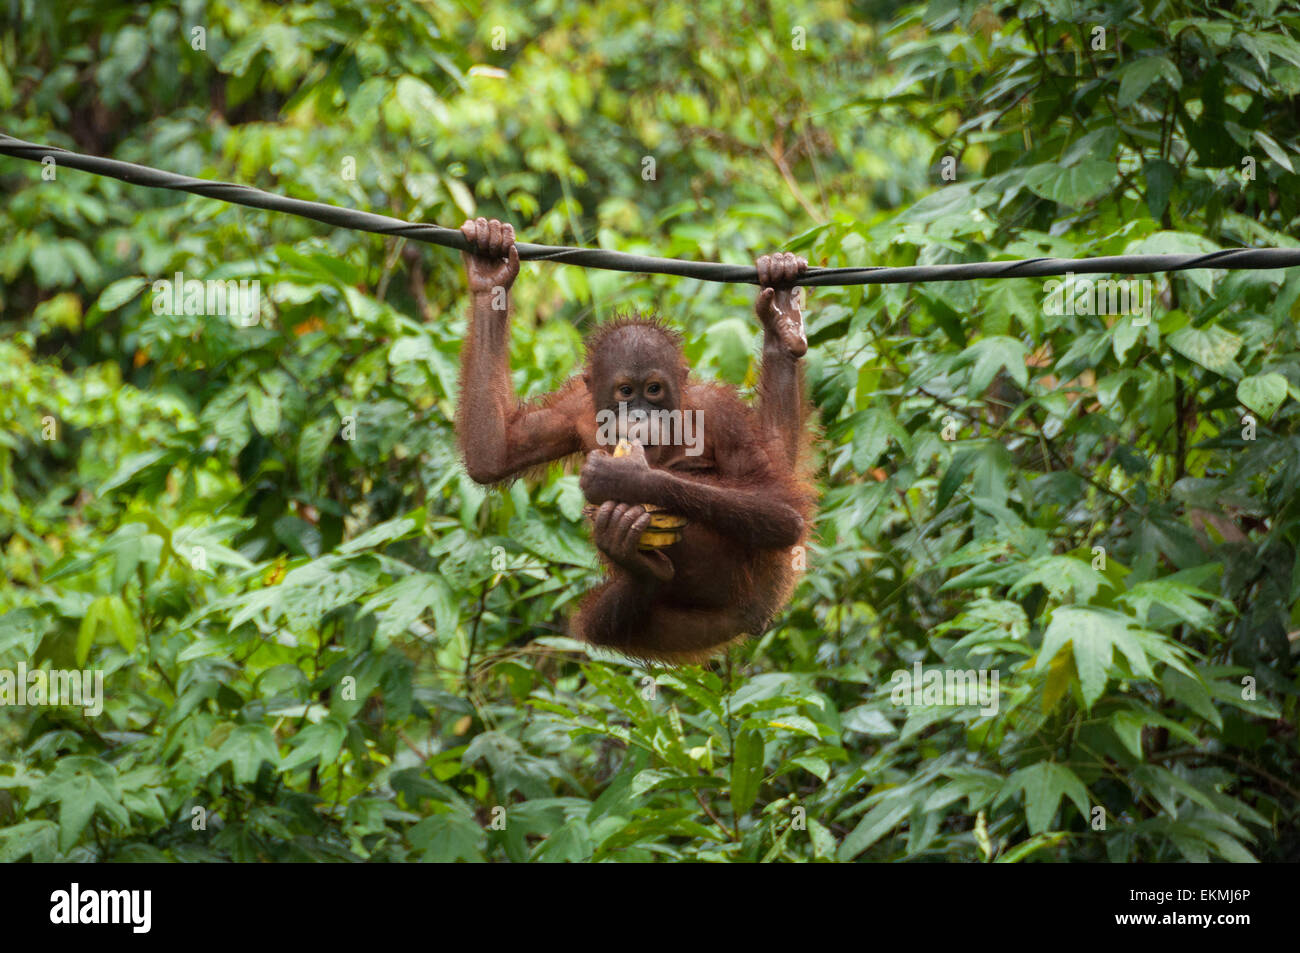 Santuario de orangutanes Sepilok, Sabah, Borneo, Malasia Foto de stock